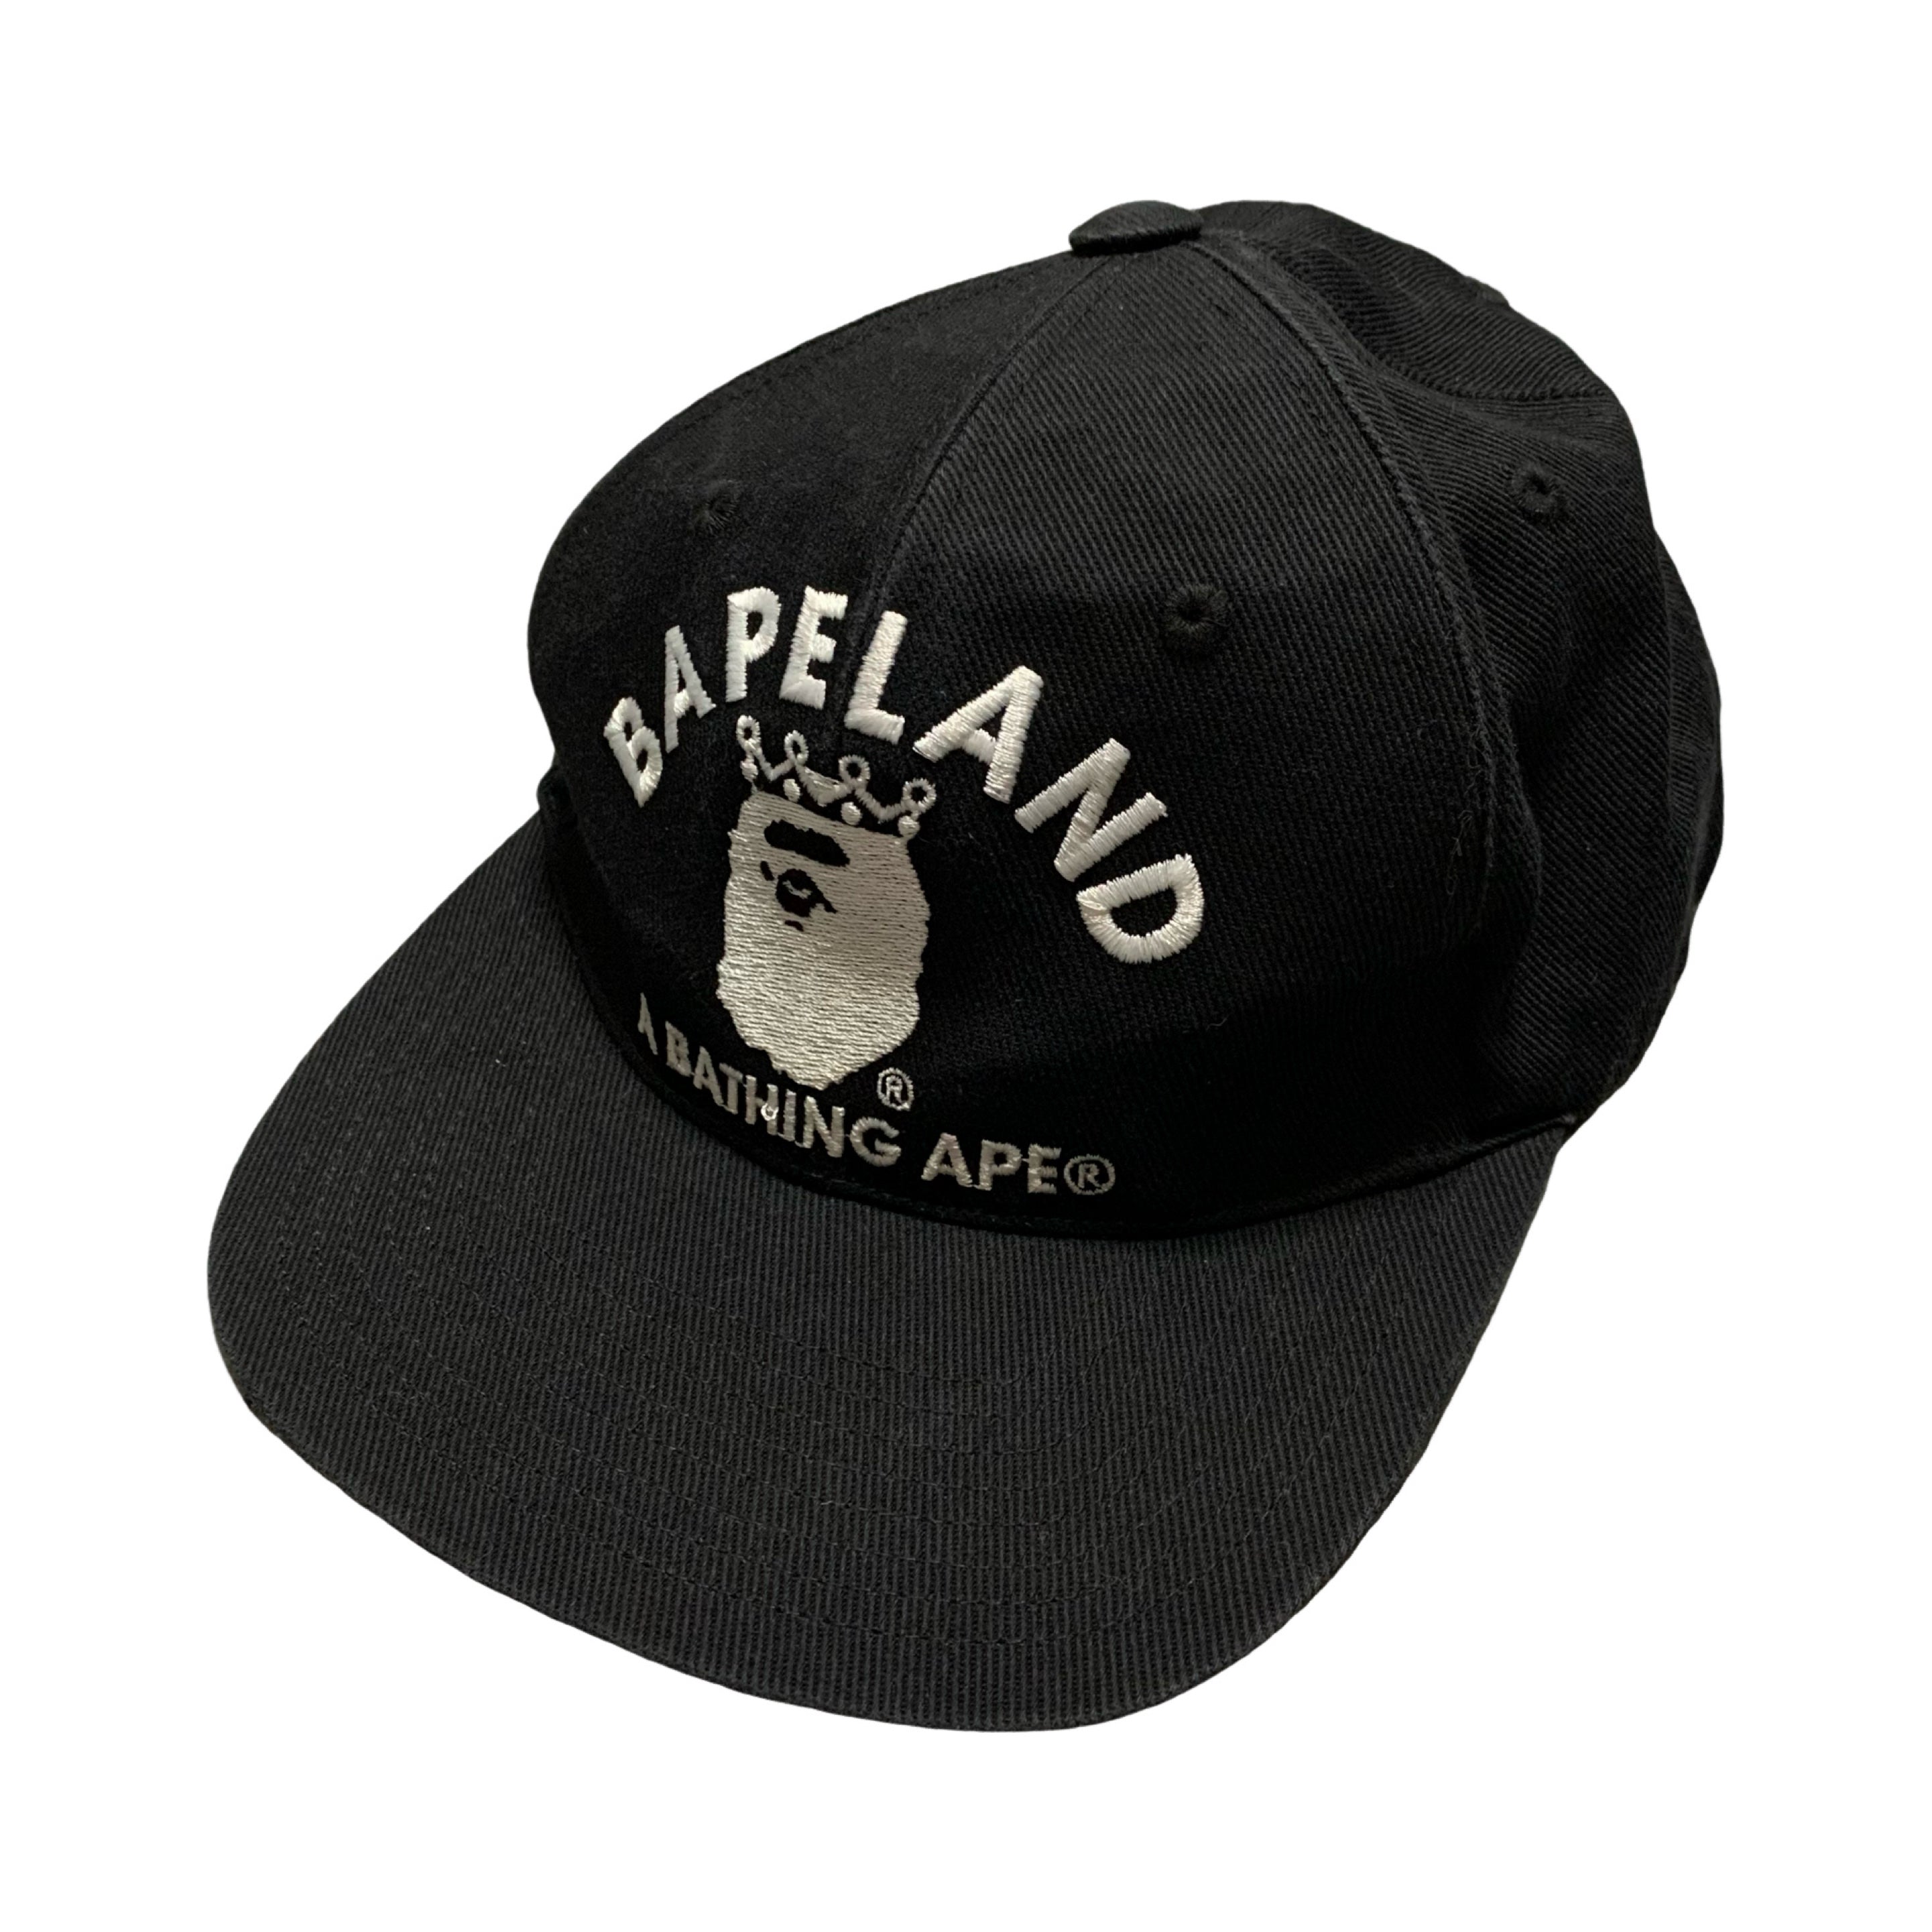 Bape Cap BAPELAND Black Hat Snapback A Bathing Ape